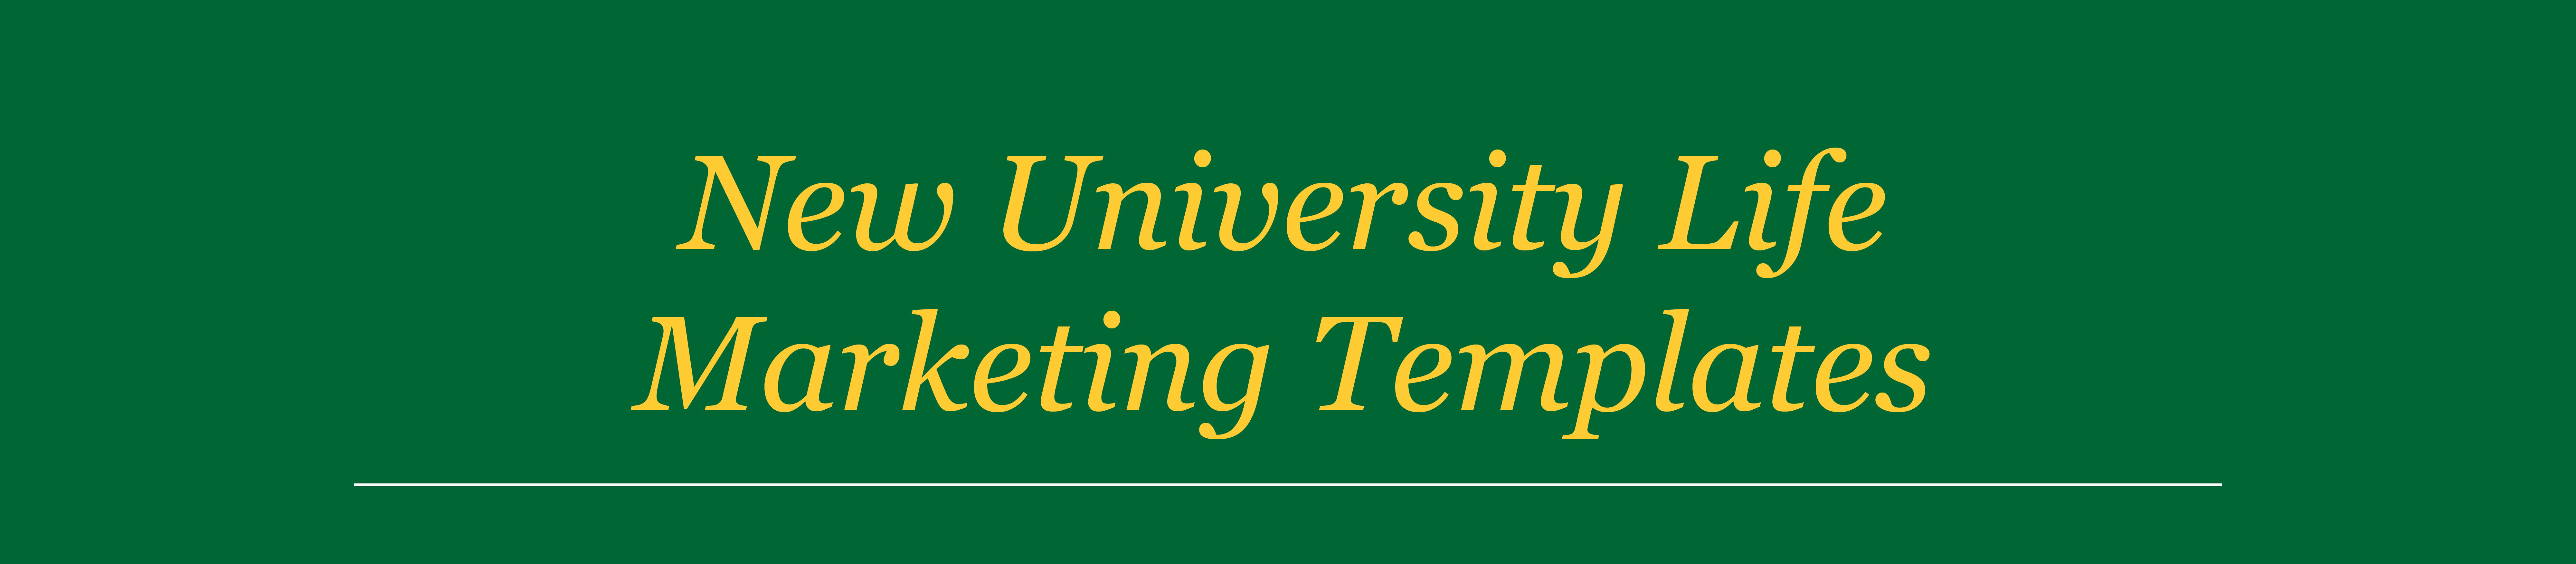 New University Life Marketing Templates Header